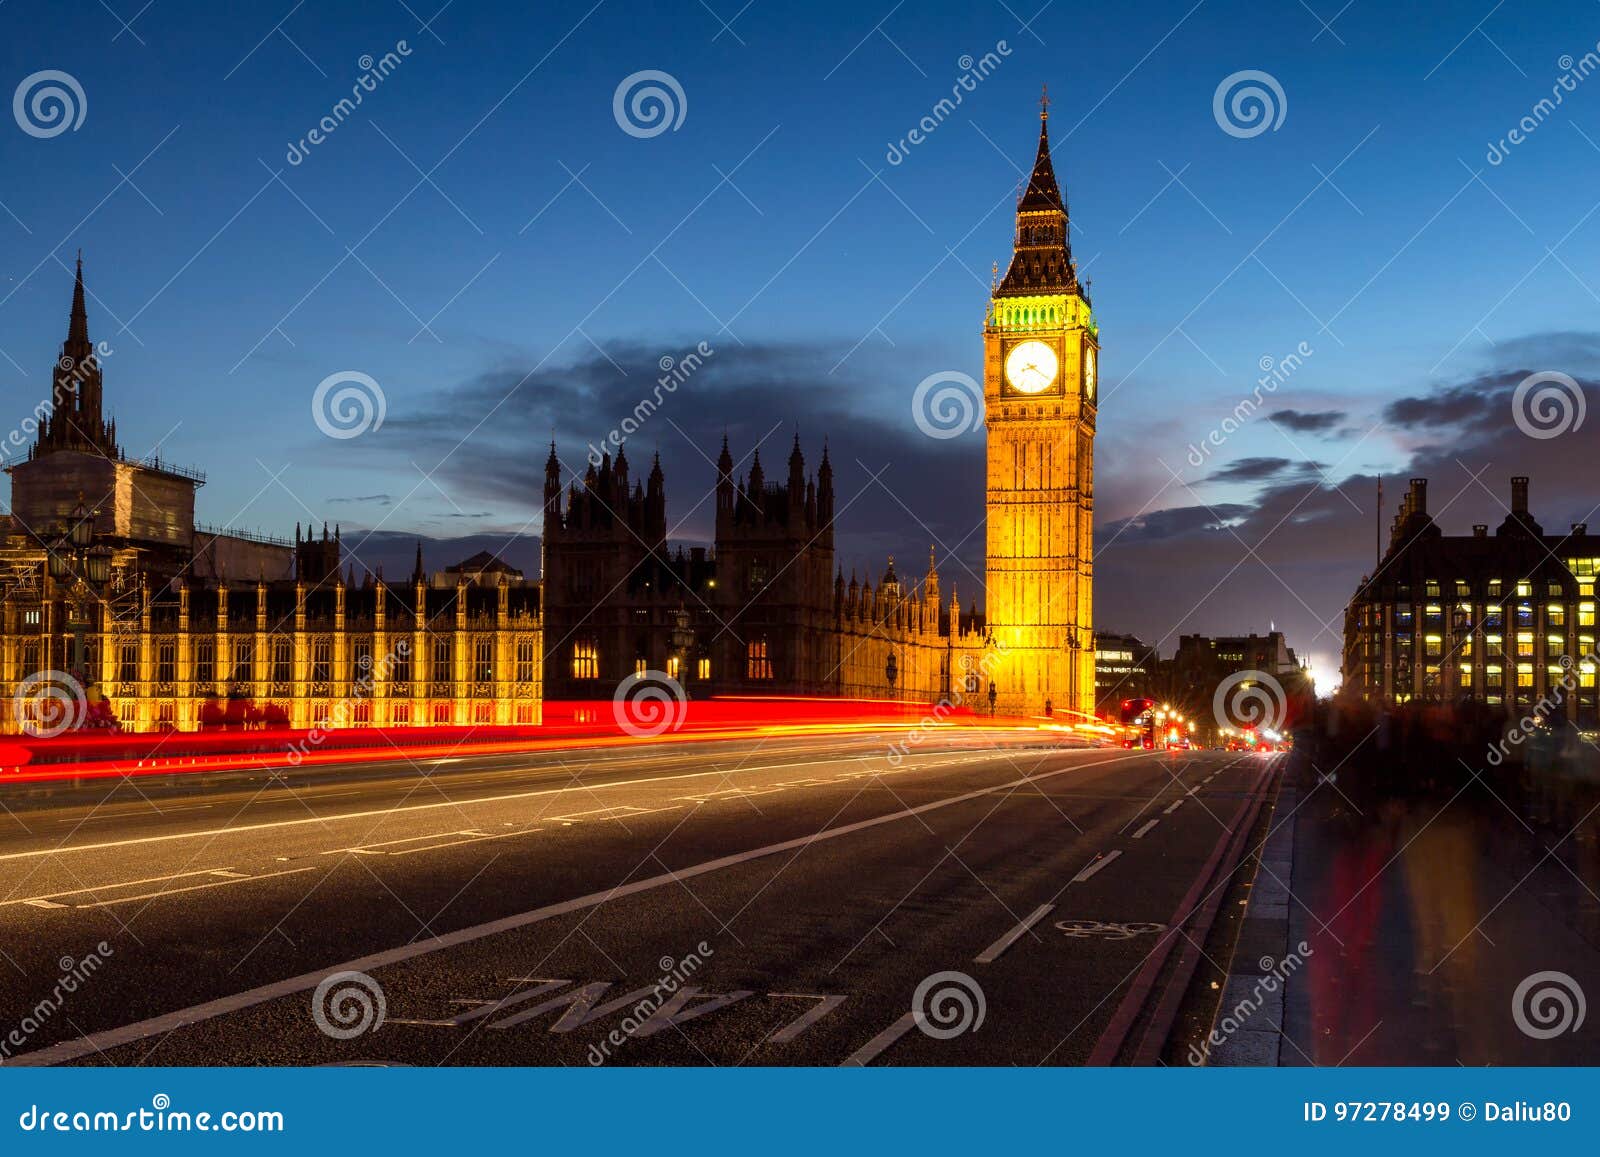 Big Ben and Westminster Bridge at Dusk, London, UK Stock Image - Image ...